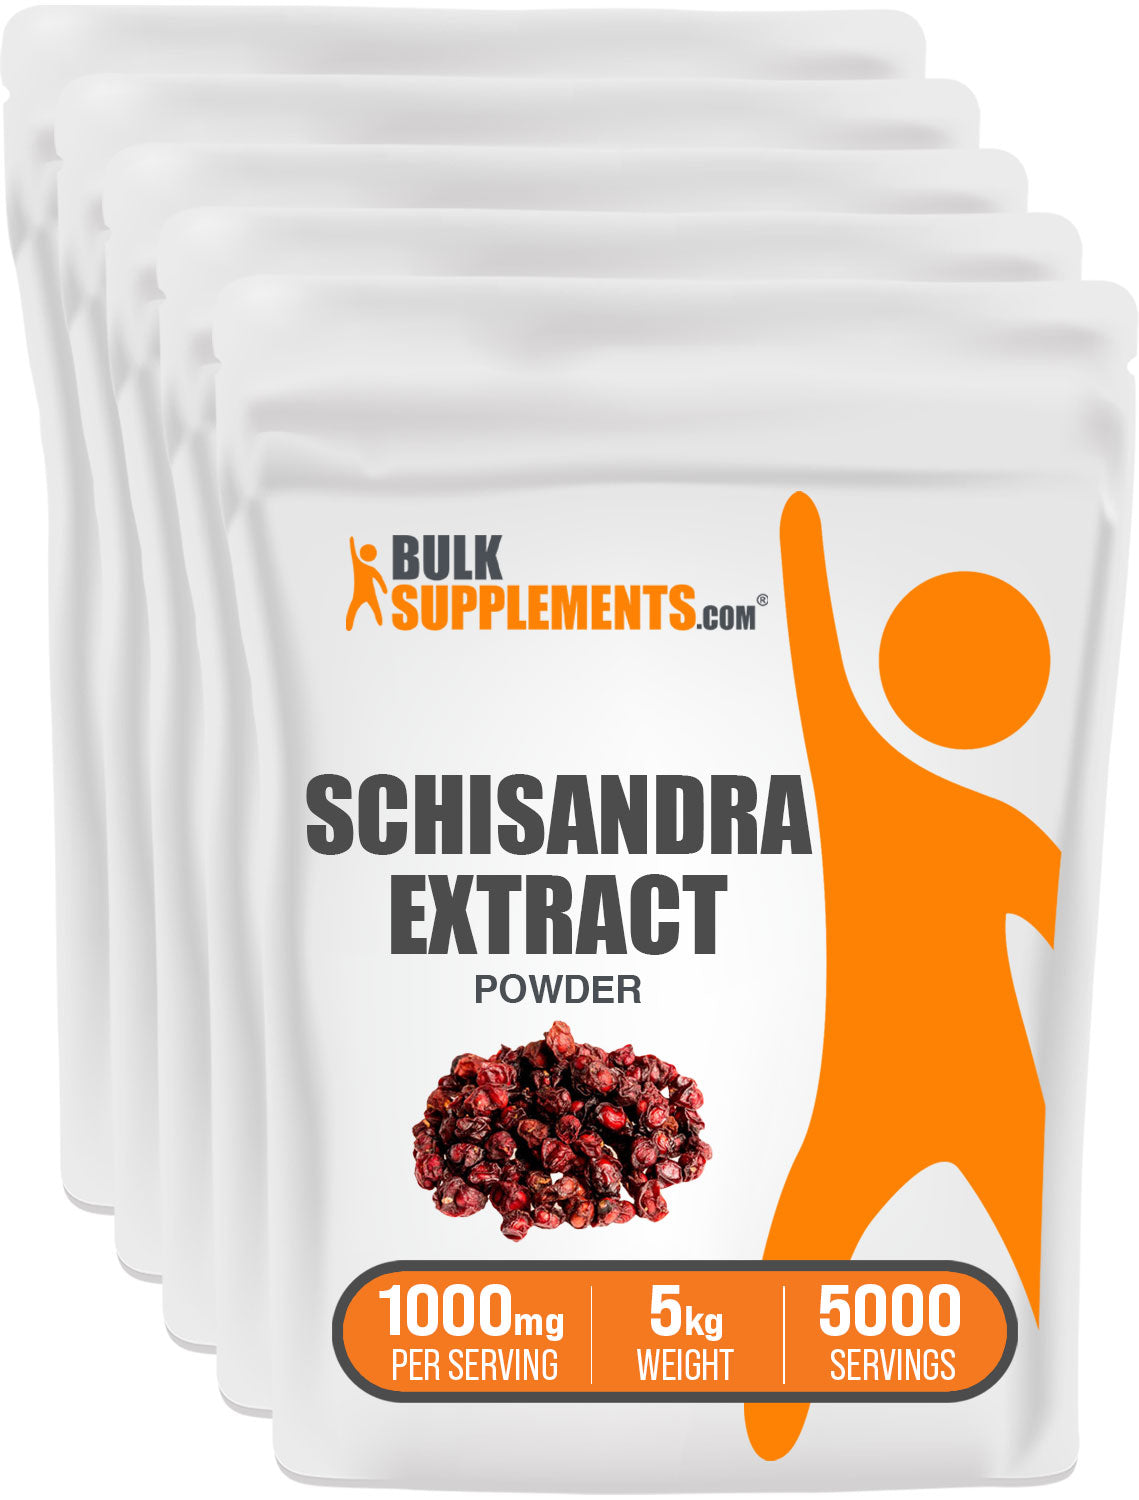 BulkSupplements Schisandra Extract Powder 5kg bag